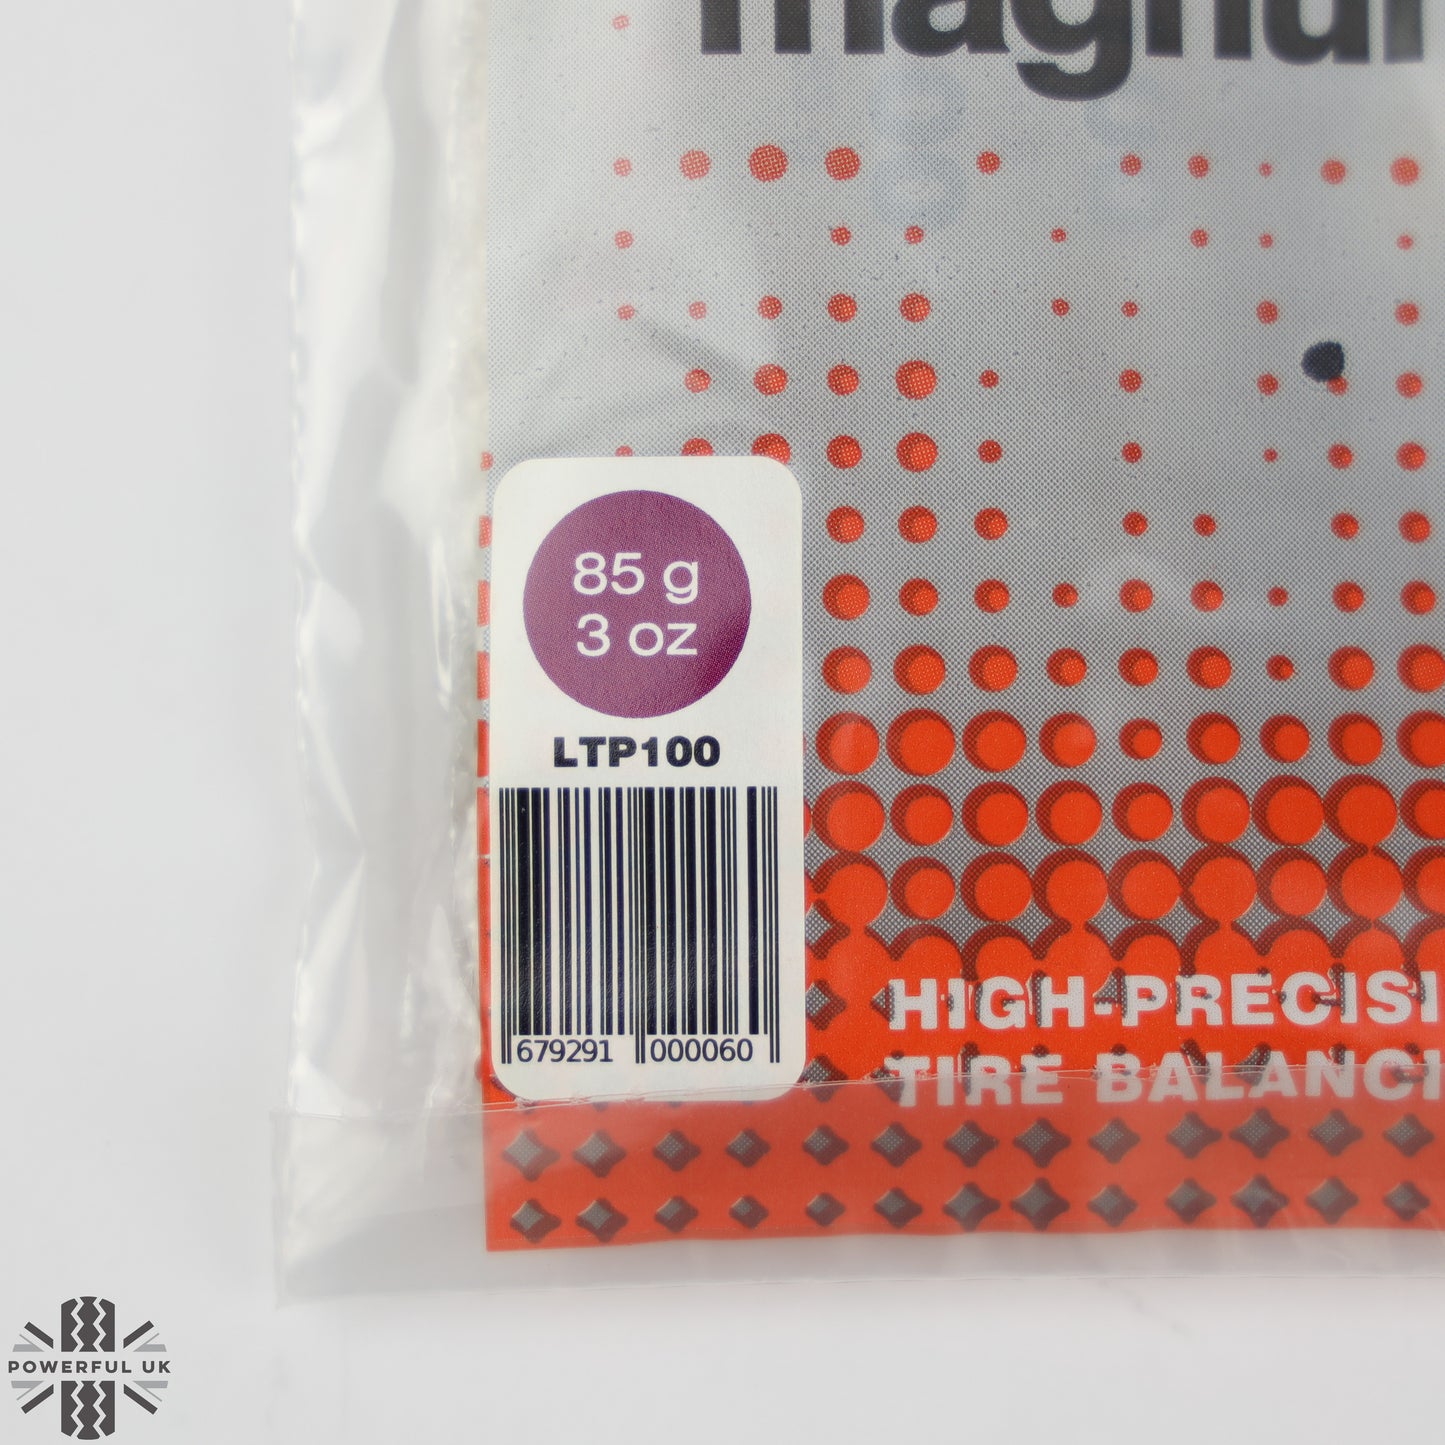 MAGNUM+ Tyre Balancing Beads - 5x 85g Bags